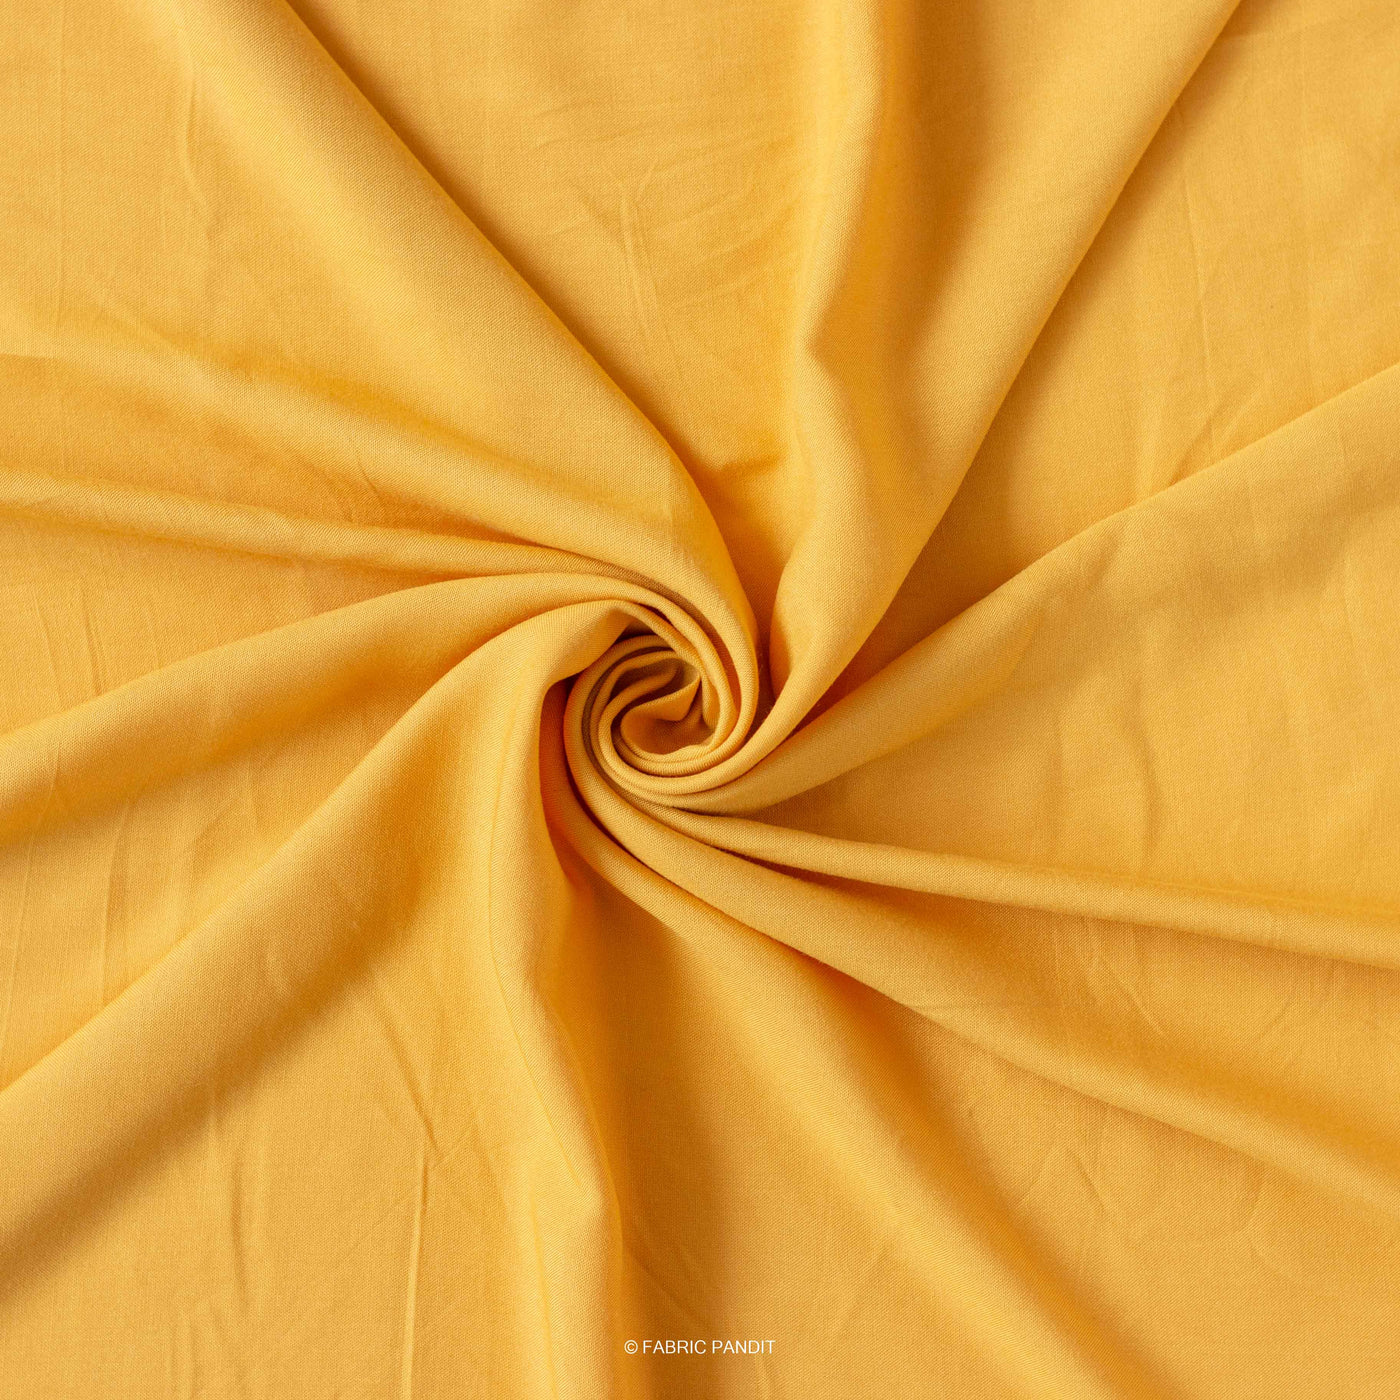 Fabric Pandit Fabric Bold Yellow Color Pure Rayon Fabric